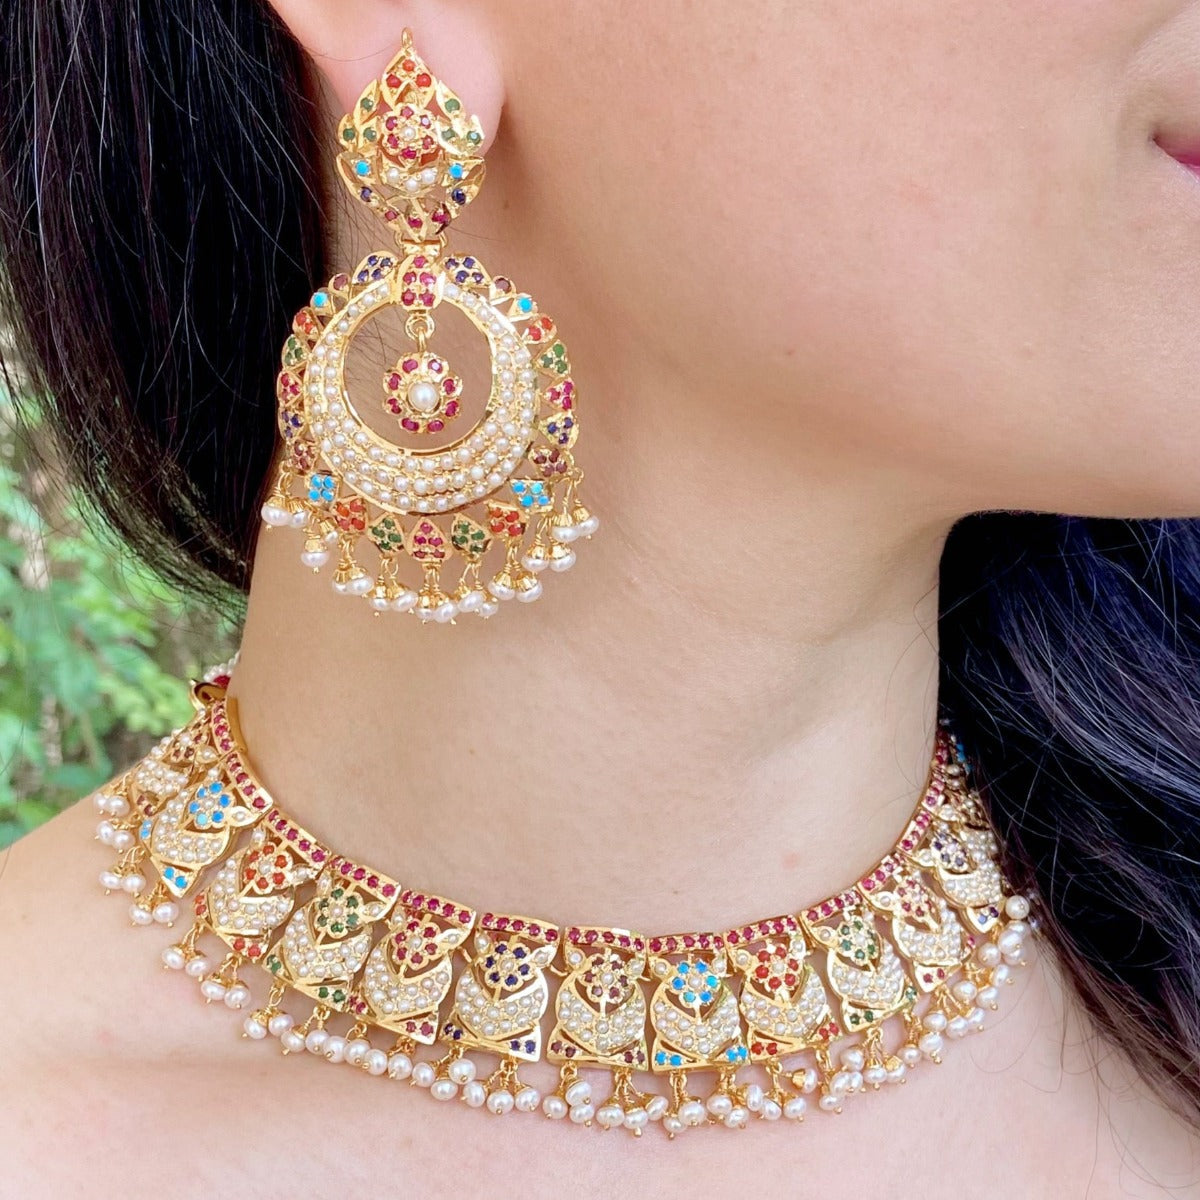 Bollywood navratna jewelry